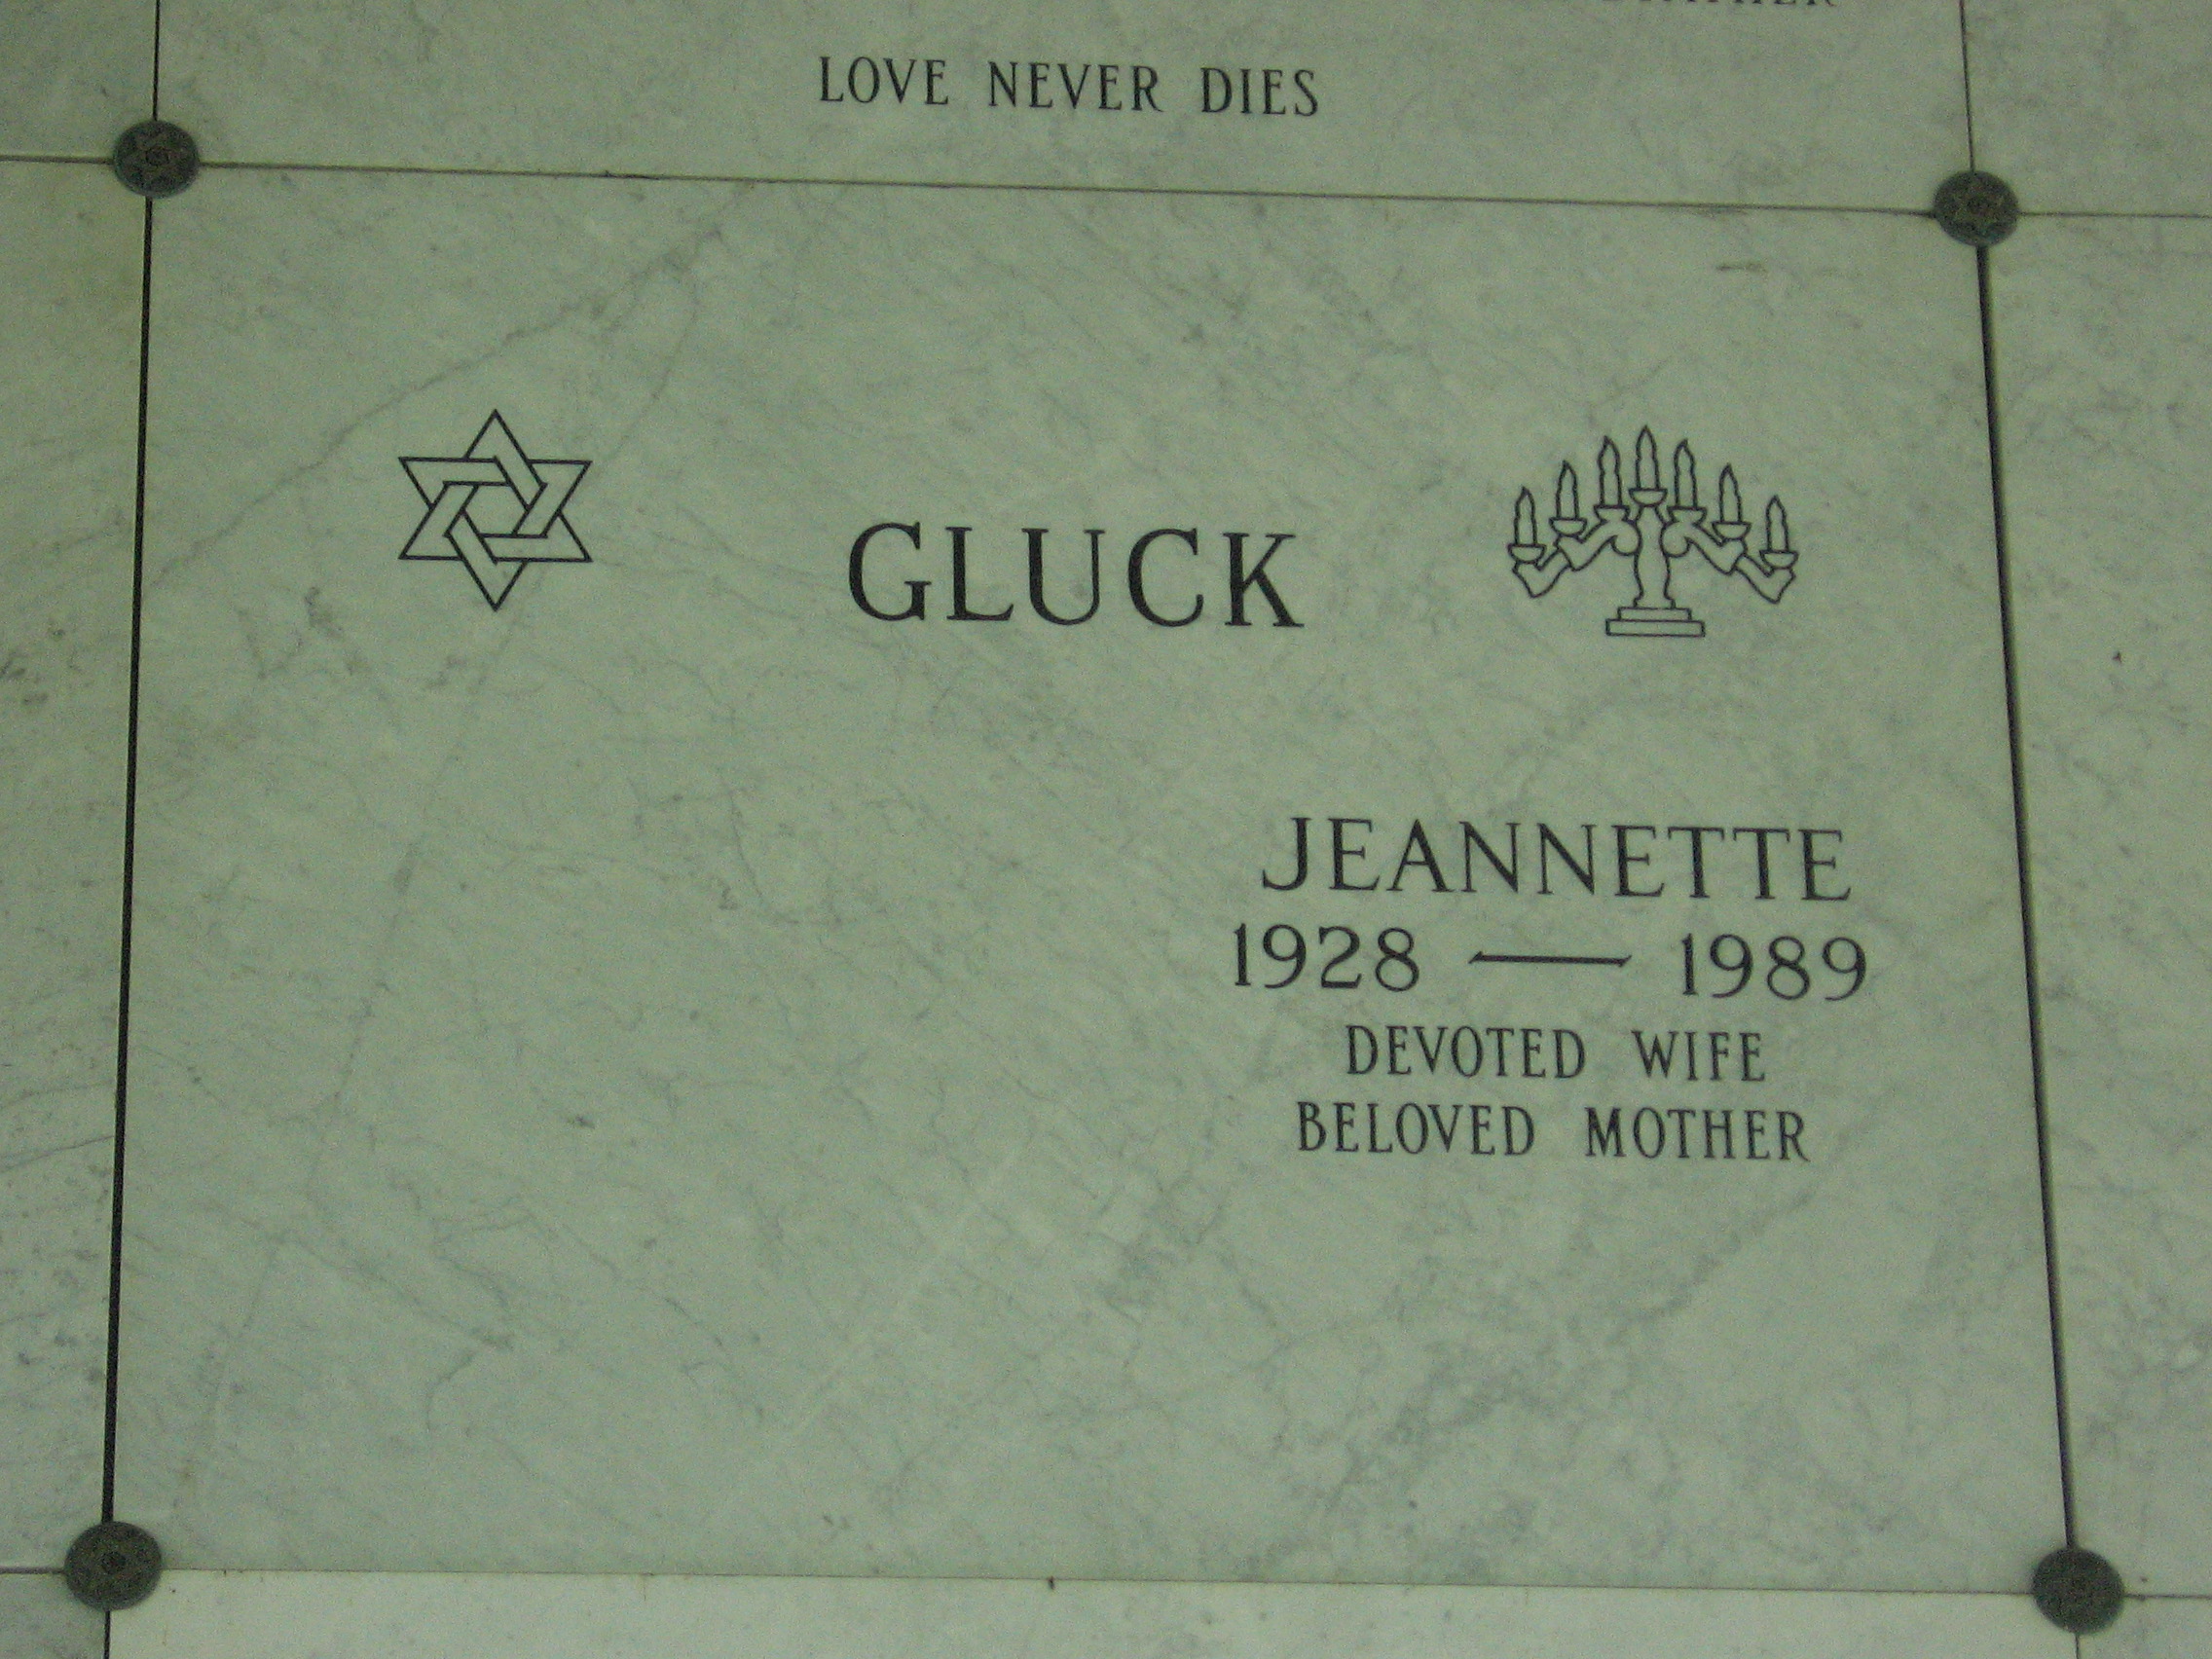 Jeannette Gluck